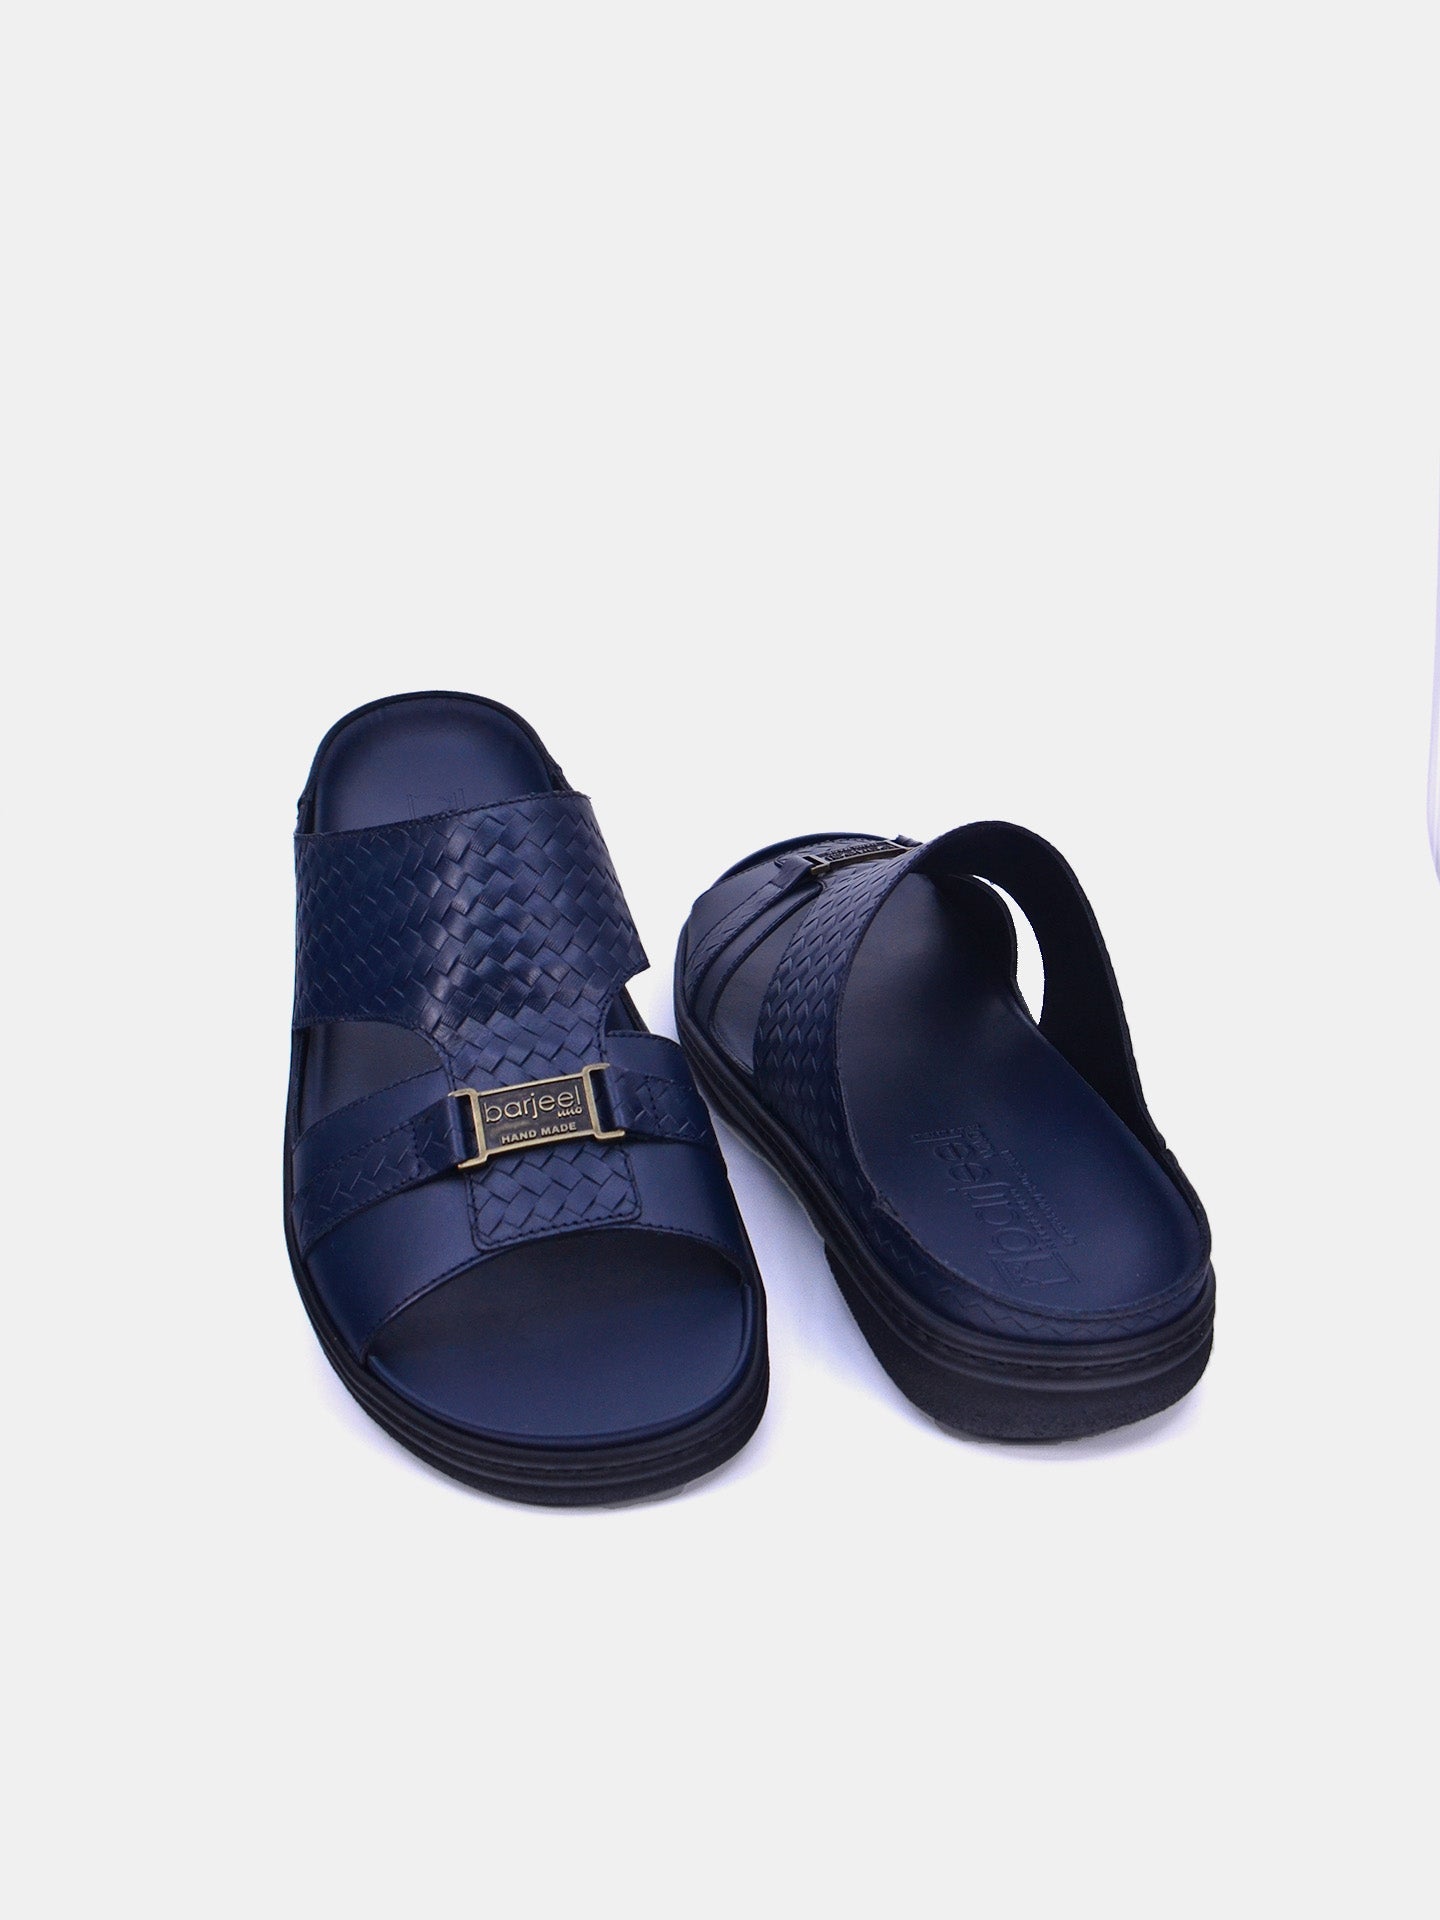 Barjeel Uno 2372 Men's Arabic Sandals #color_Navy